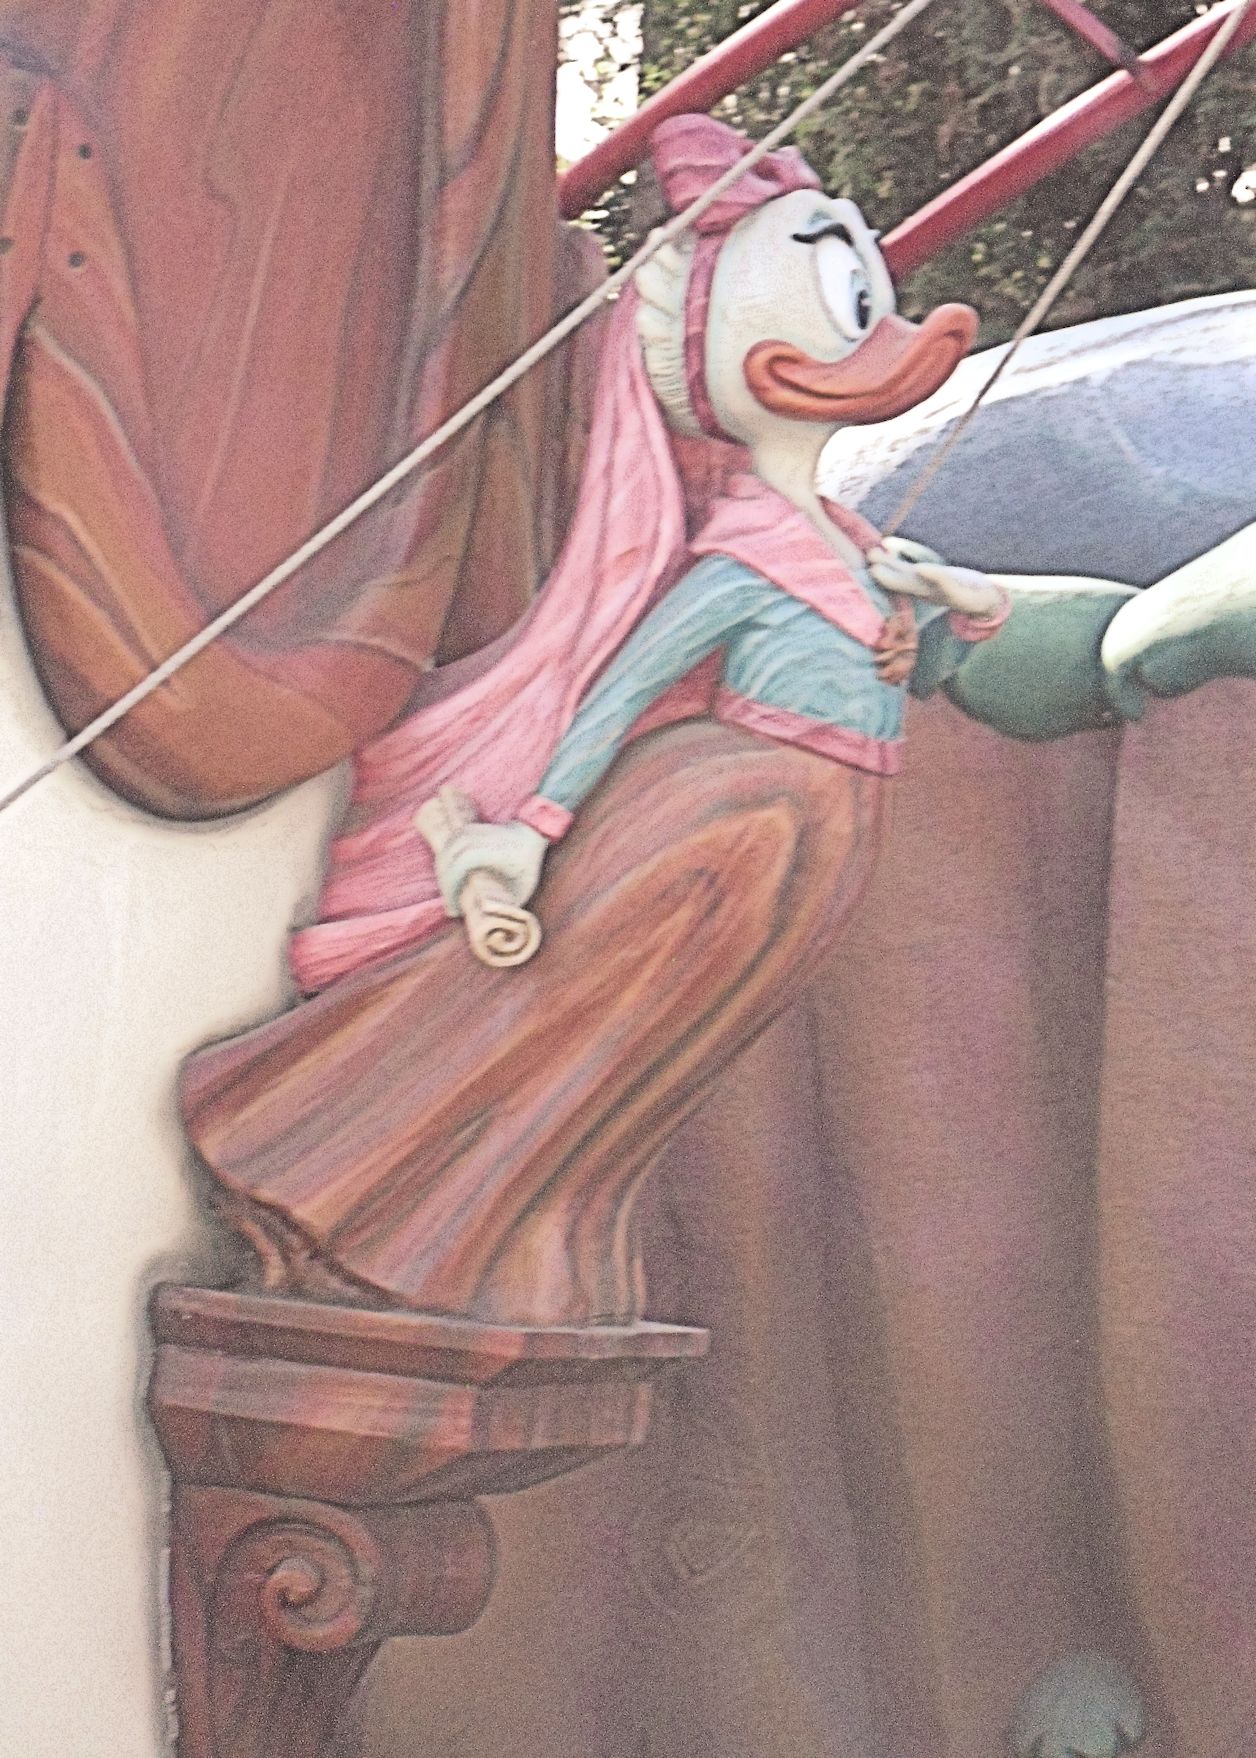 Disneyland--Toontown--Donald Duck boat figurehead Miss Daisy